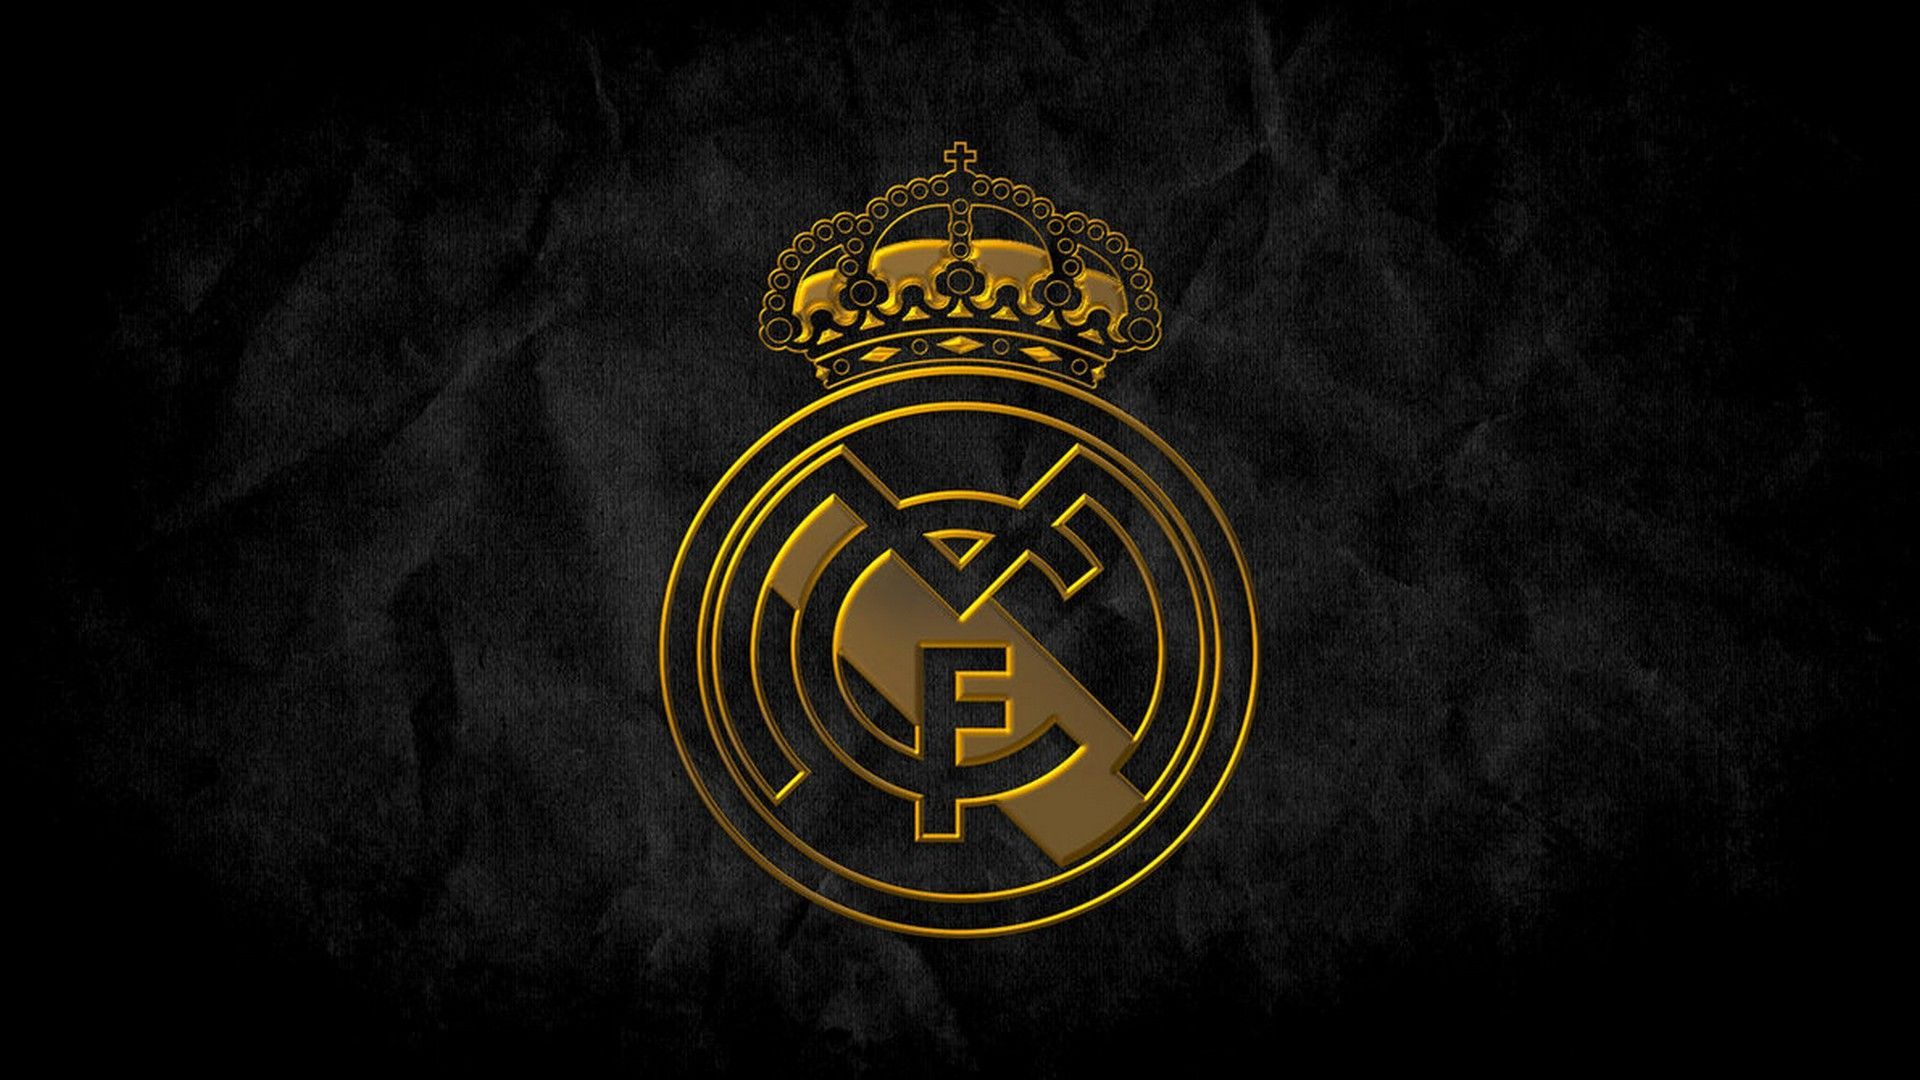 Real Madrid CF HD Wallpaper. Best Wallpaper HD. Real madrid wallpaper, Real madrid logo wallpaper, Madrid wallpaper